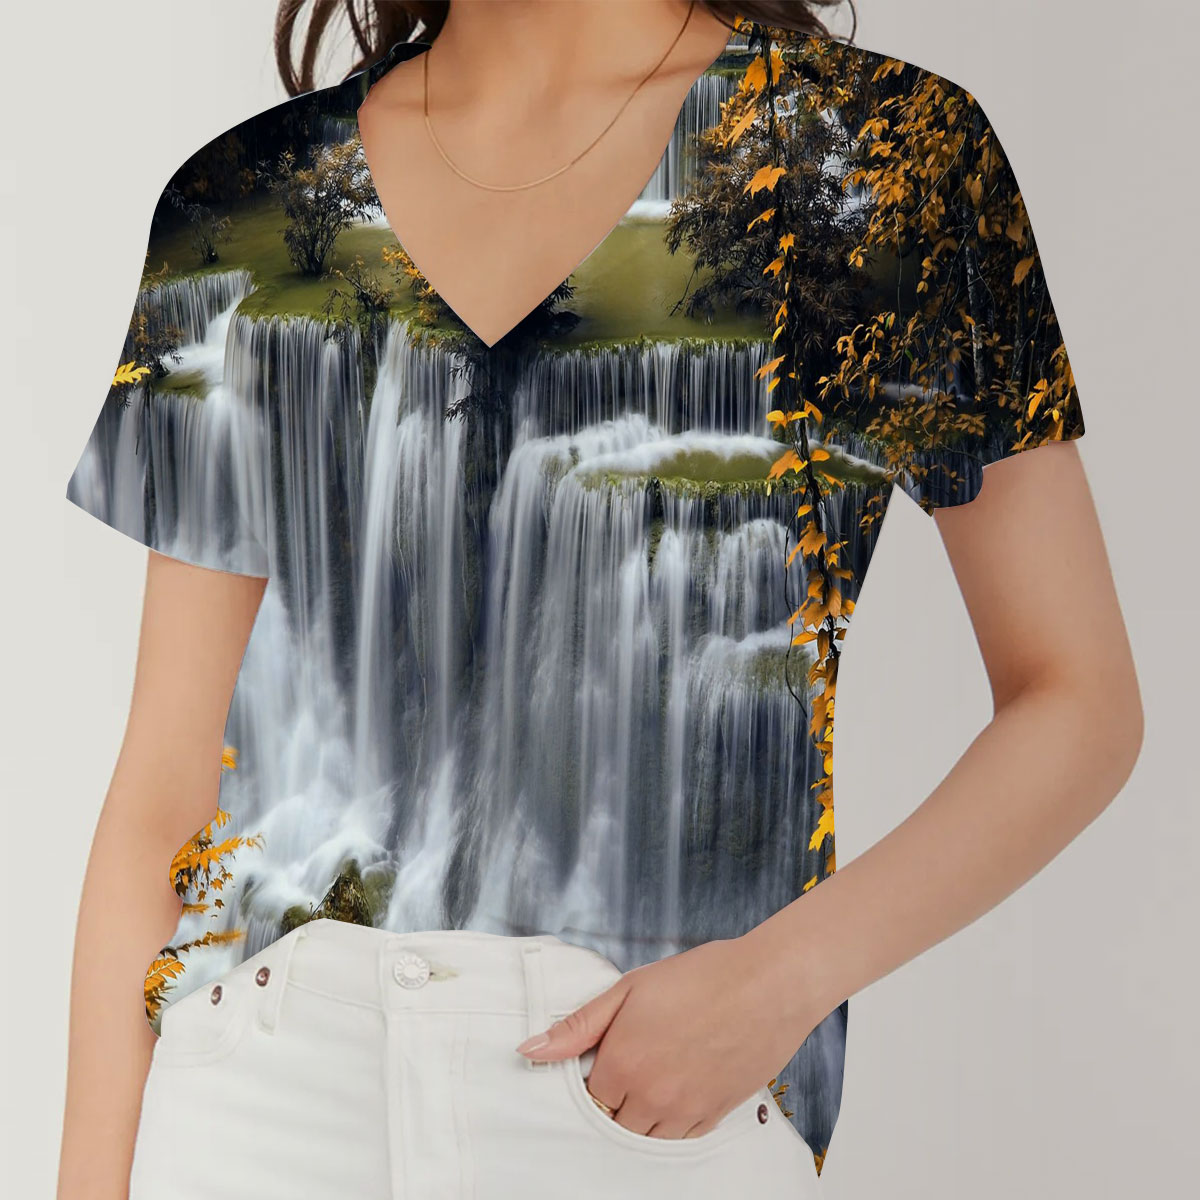 Stunning Autumn Waterfall V-Neck Women's T-Shirt